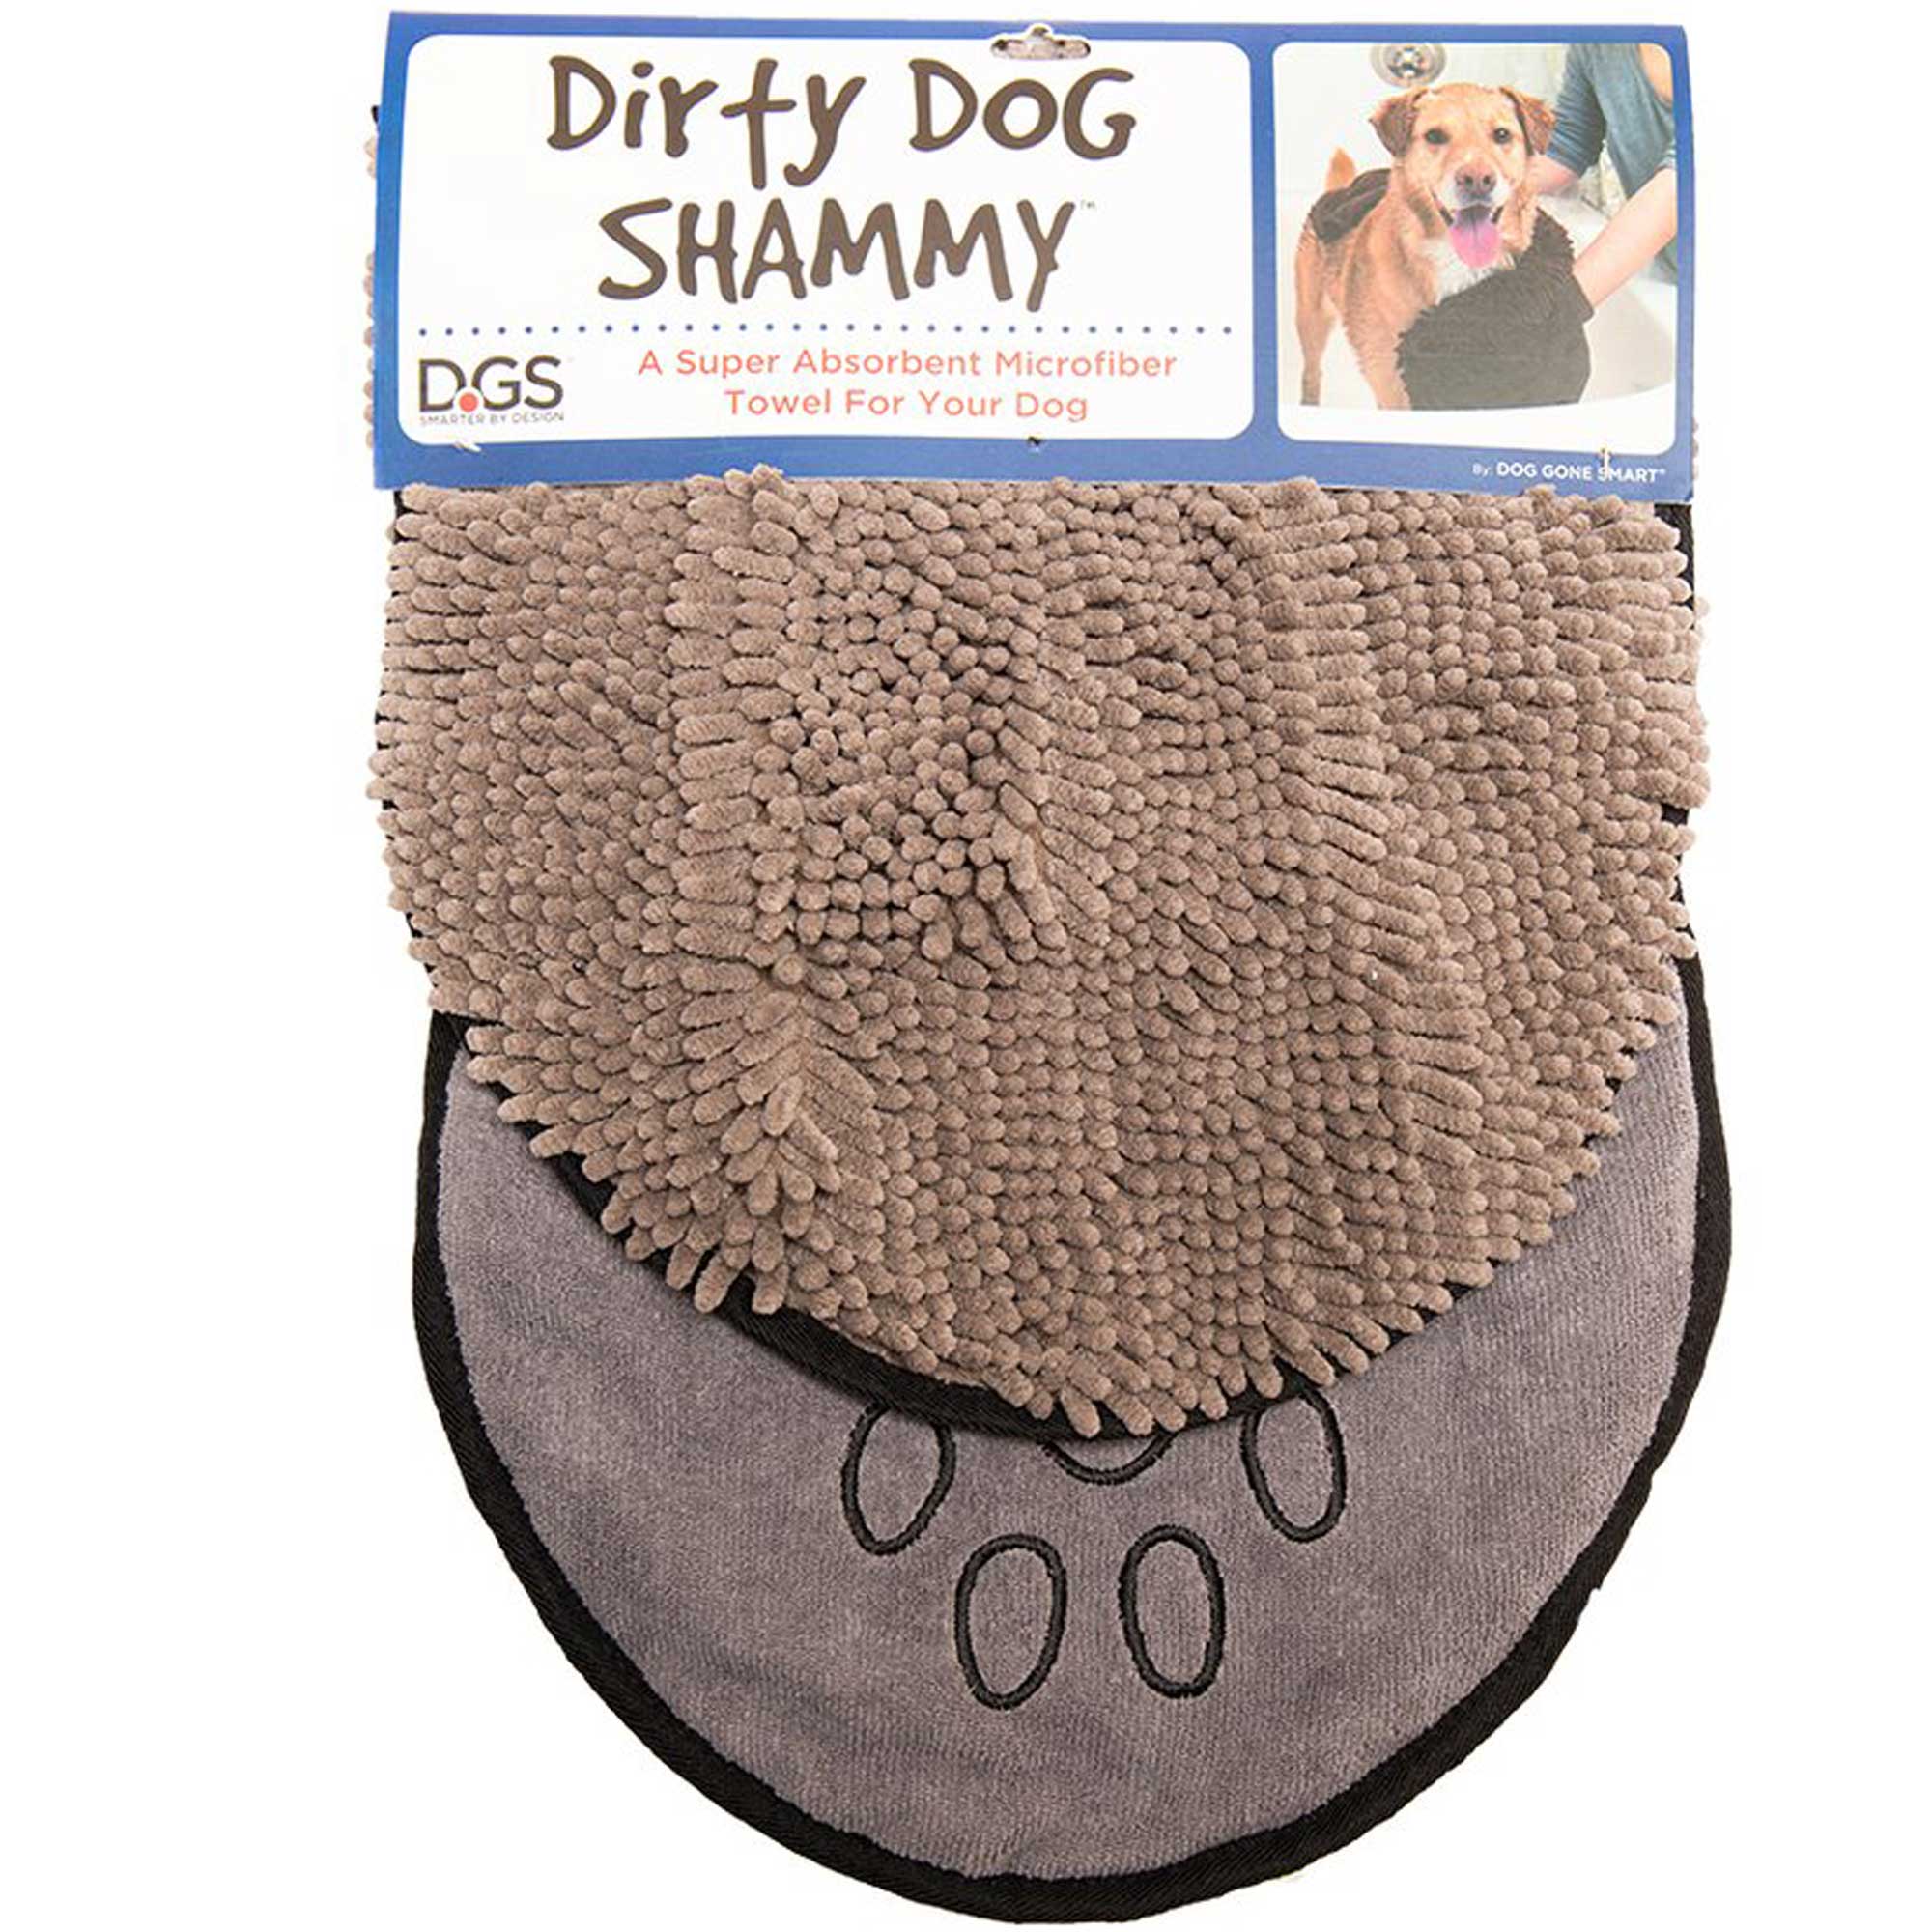 Dirty Dog Shammy Towel Usage